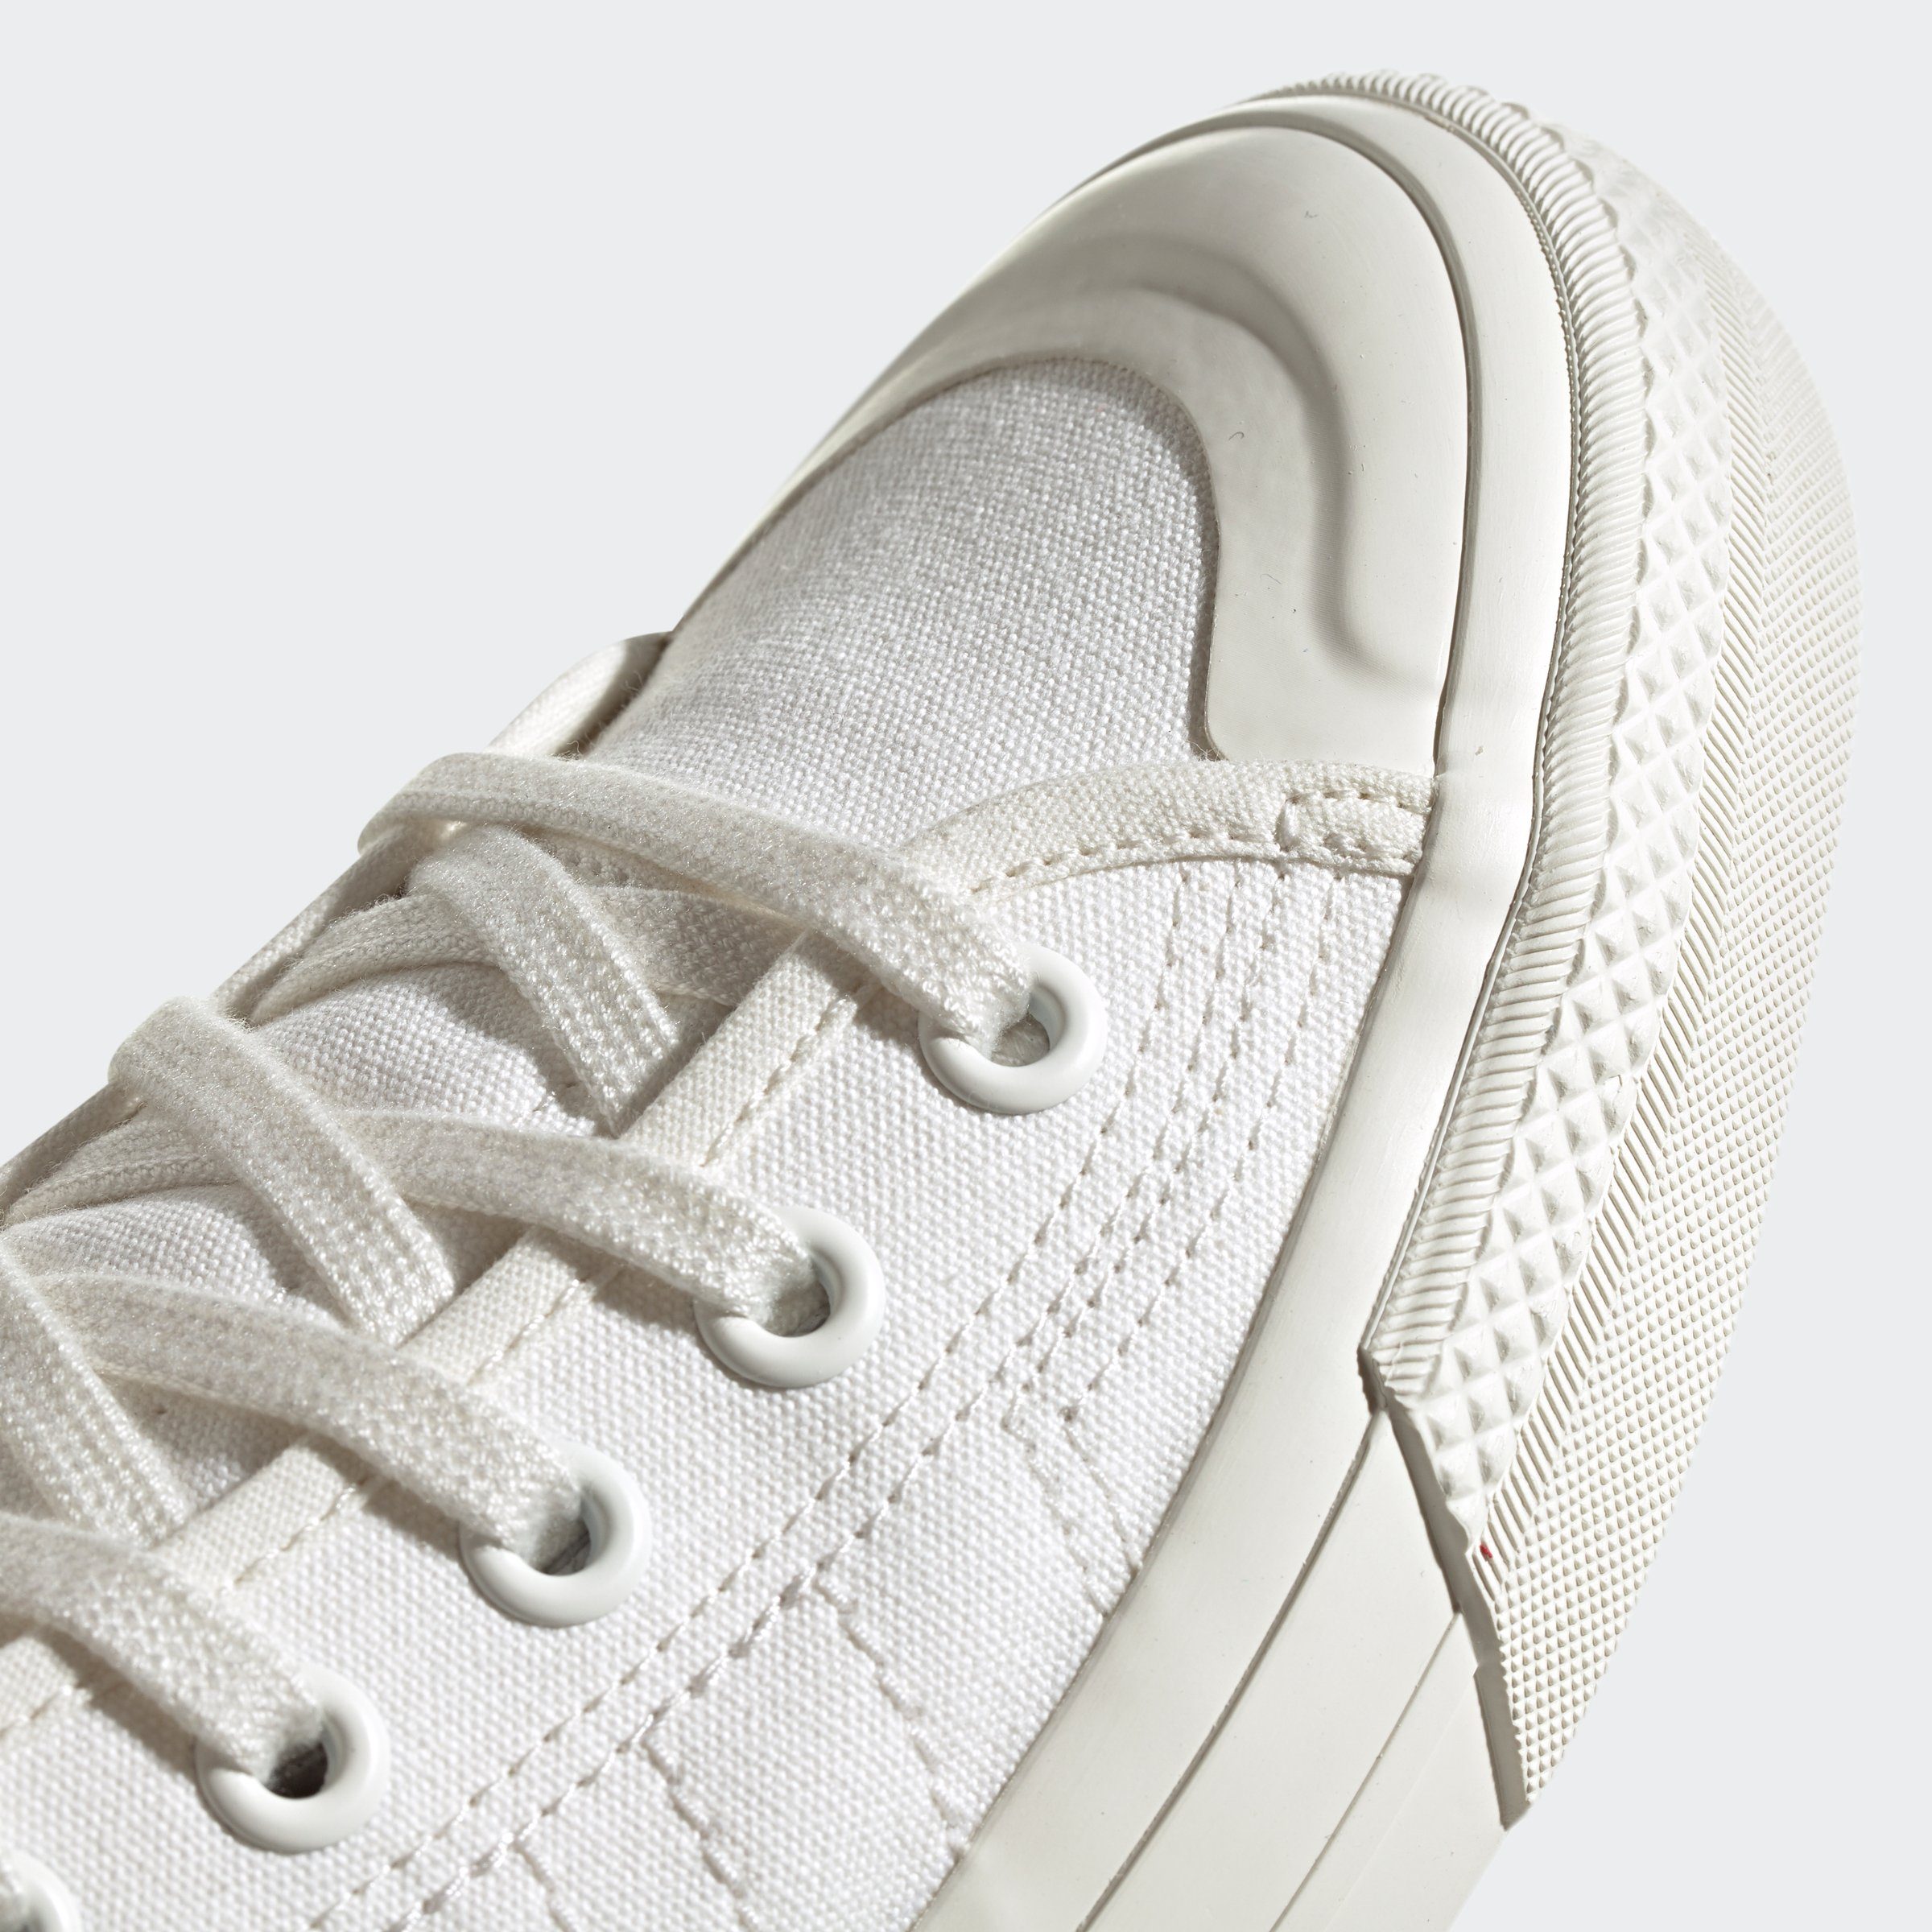 HI adidas / White RF Cloud White Sneaker Originals NIZZA White Cloud / Off